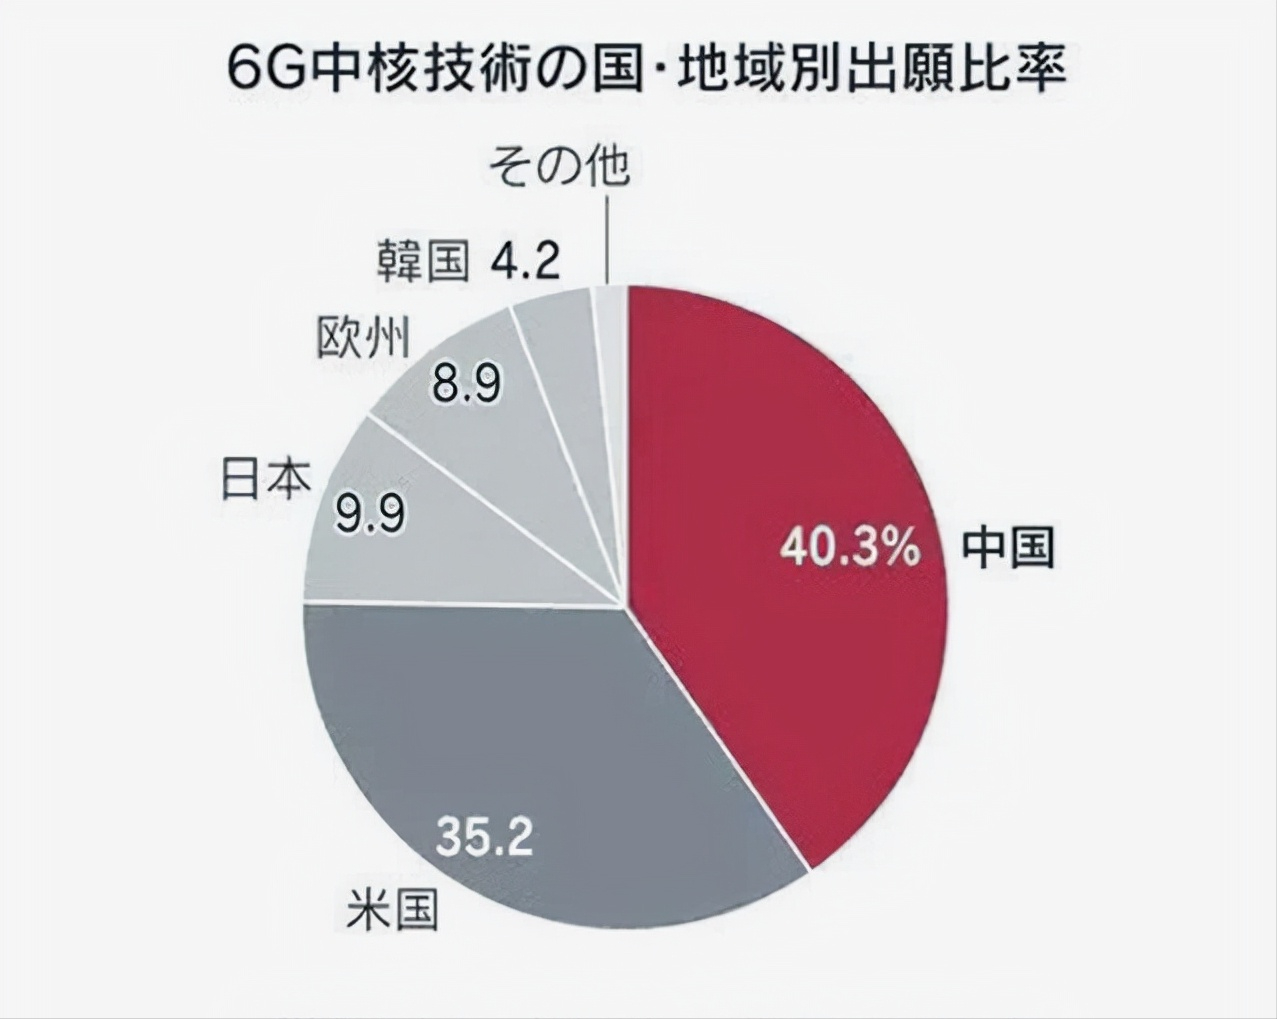 5G 网络普及速度惊人，已覆盖中国哪些区域？对生活影响巨大  第3张